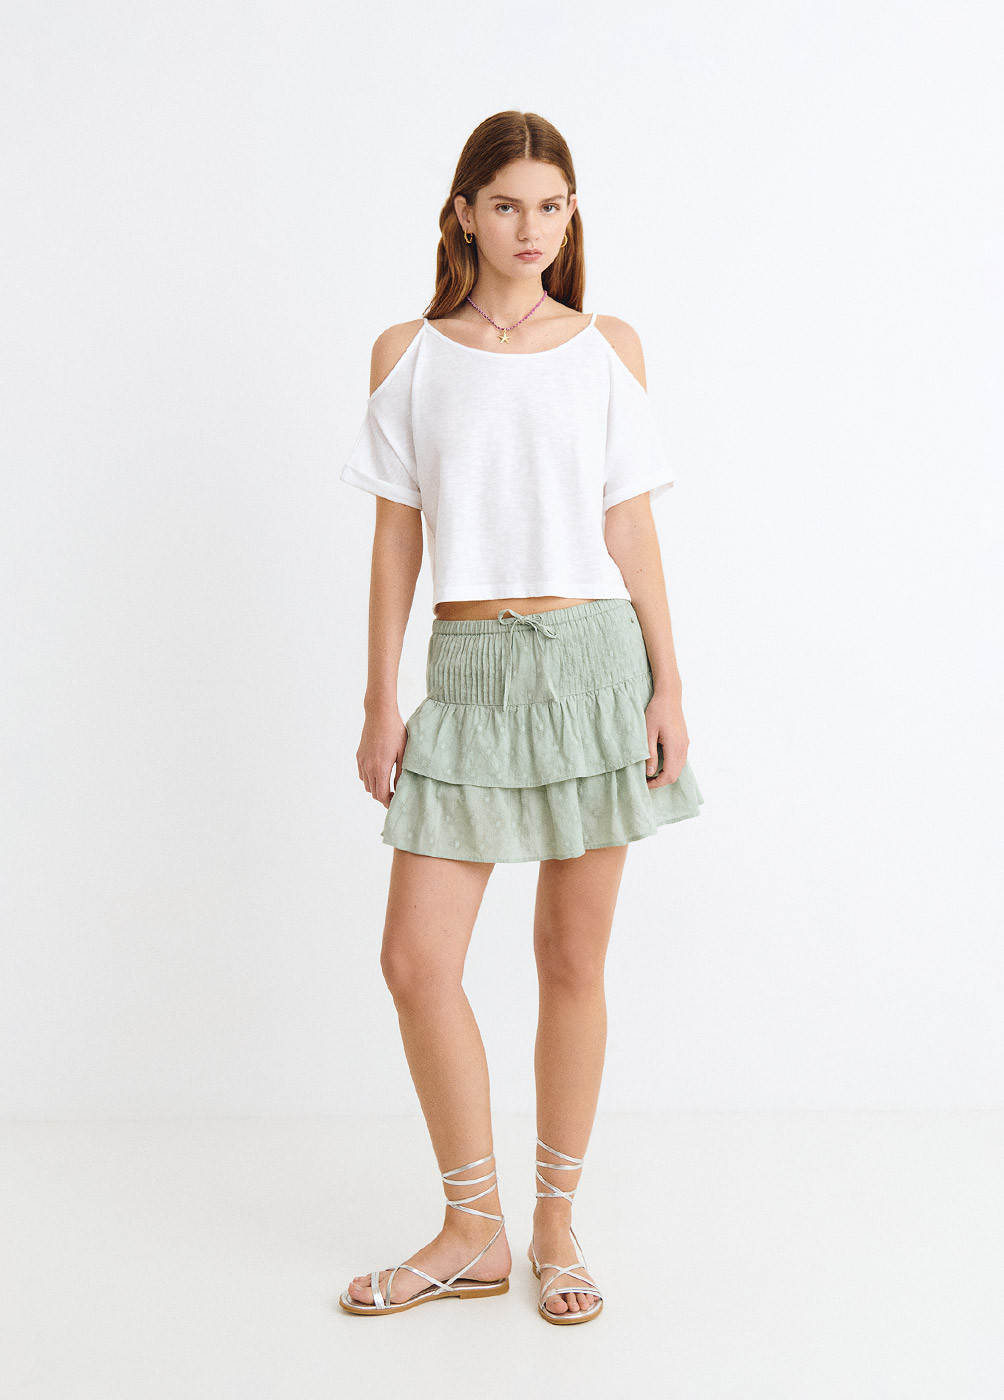 Textured fabric pin-tuck skirt